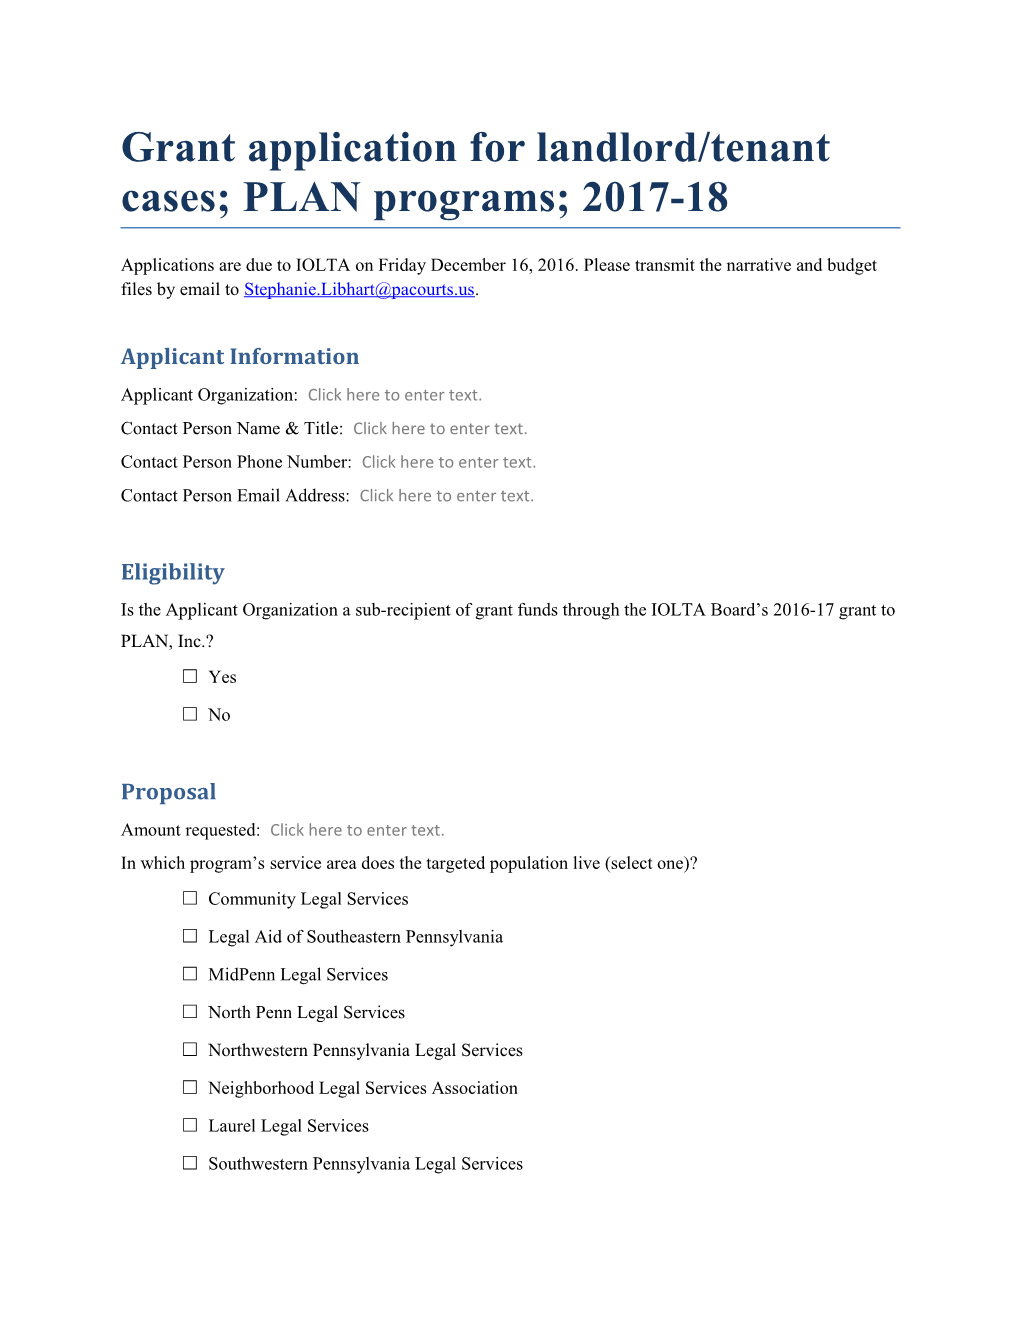 Grant Application for Landlord/Tenant Cases; PLAN Programs; 2017-18